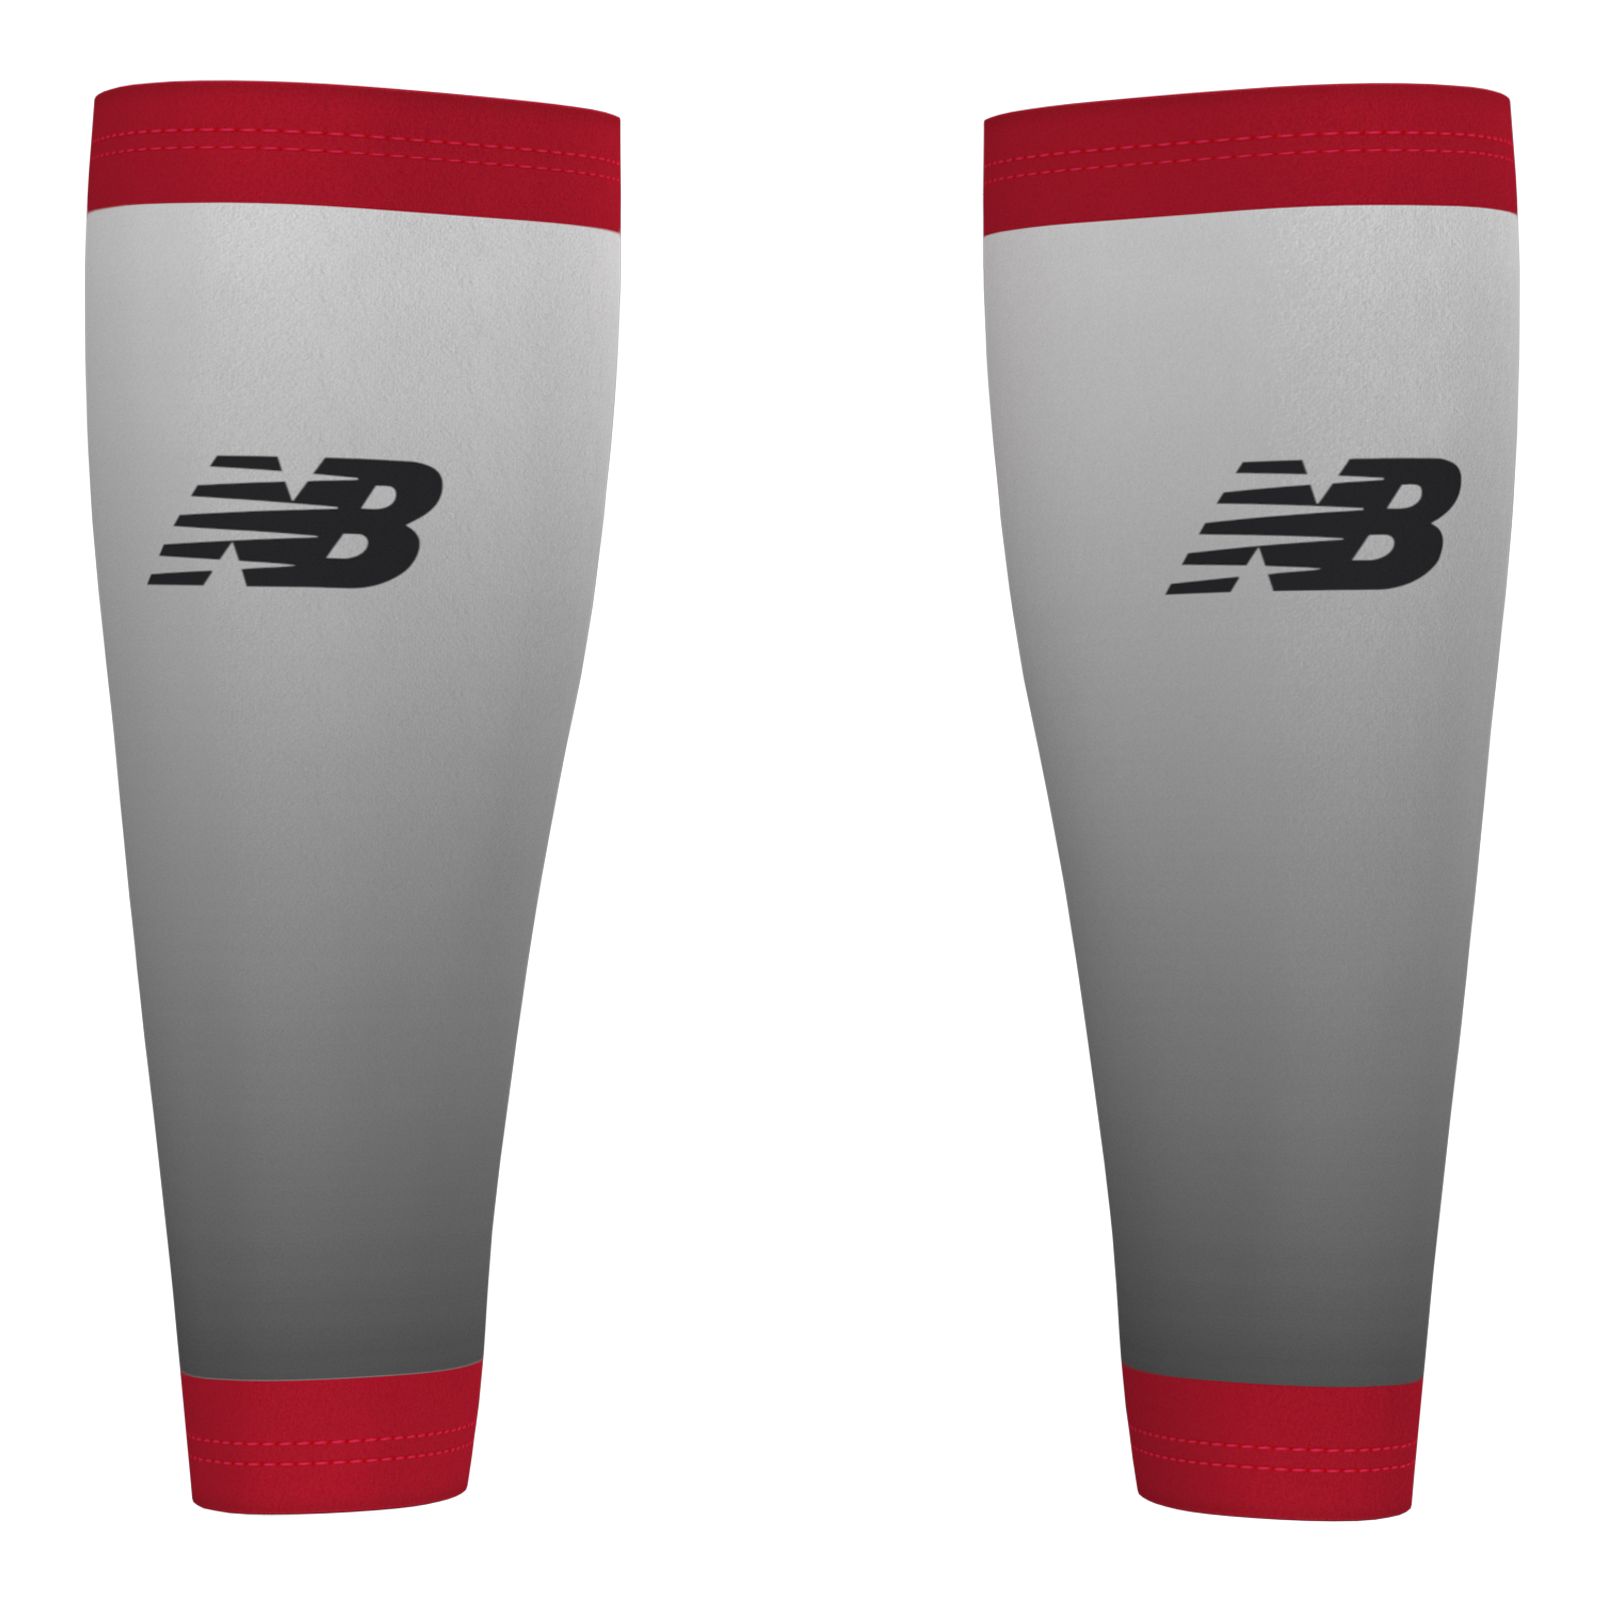  New Balance Unisex Outdoor Sports Compression Leg